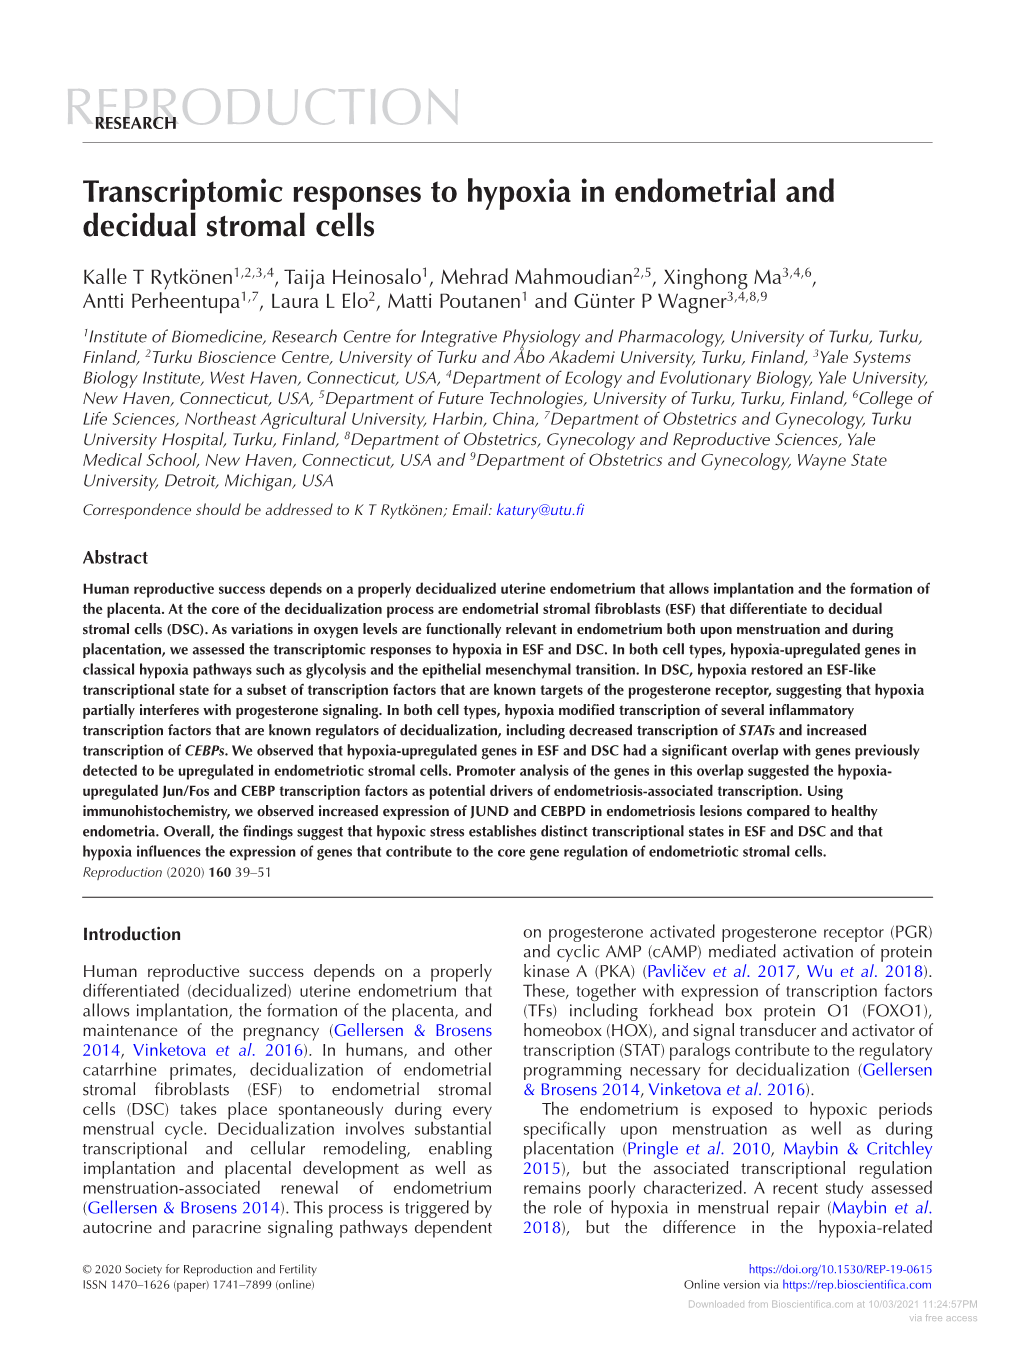 Transcriptomic Responses to Hypoxia in Endometrial and Decidual Stromal Cells